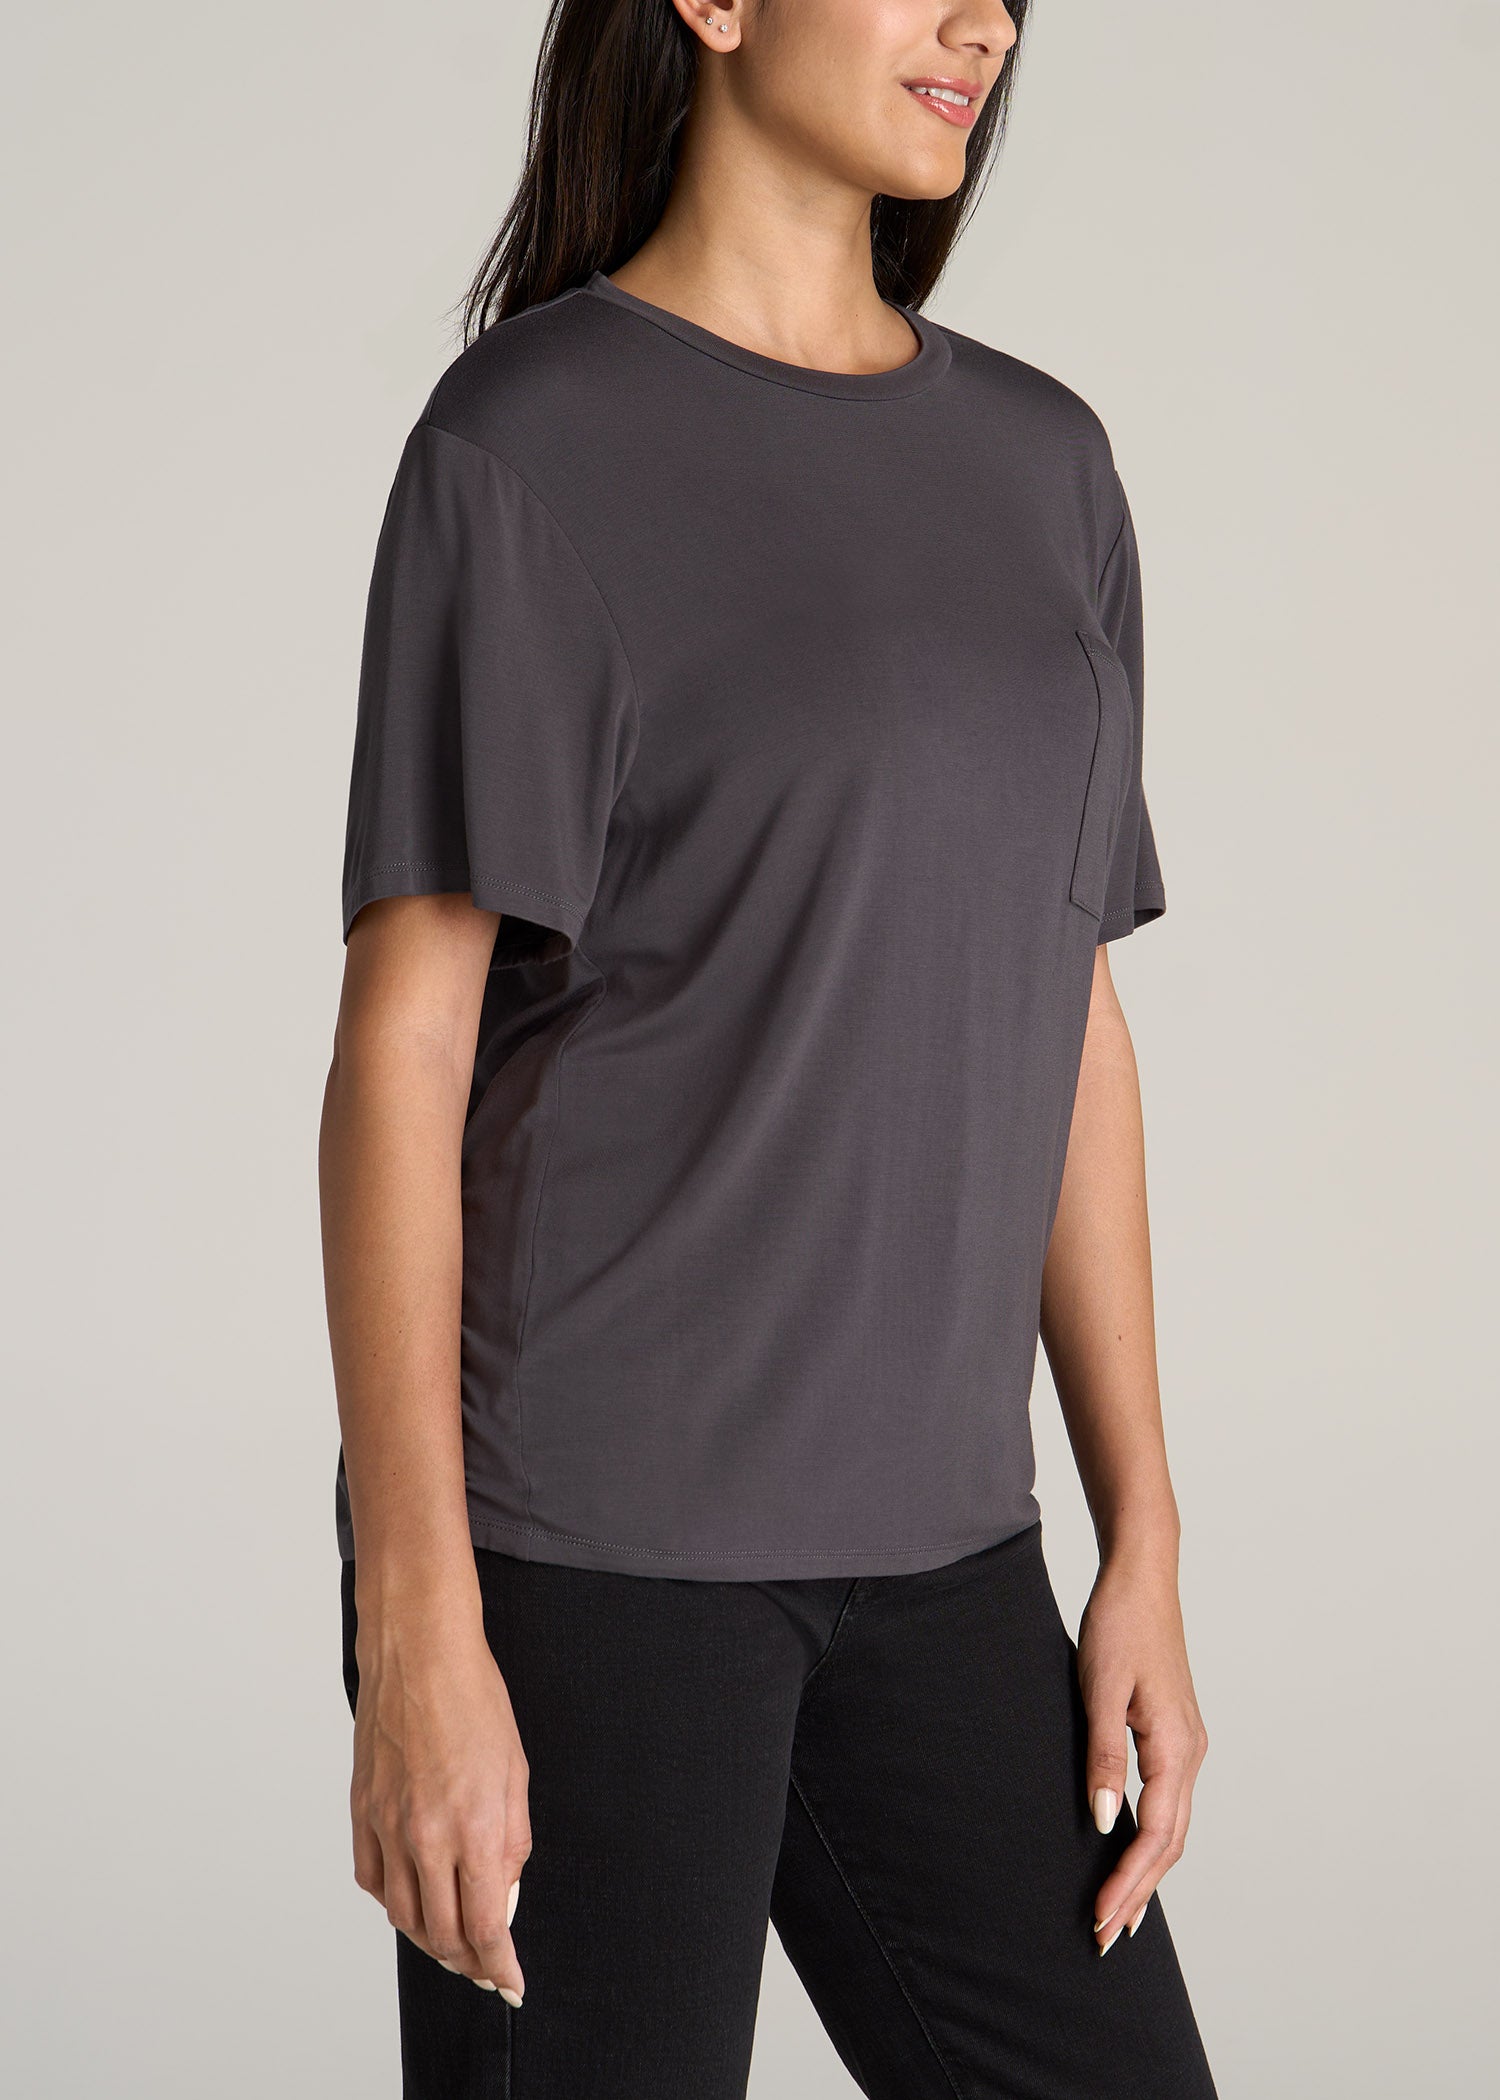 Short-Sleeve Oversized Crewneck Pocket T-Shirt for Tall Women in Dark Ash